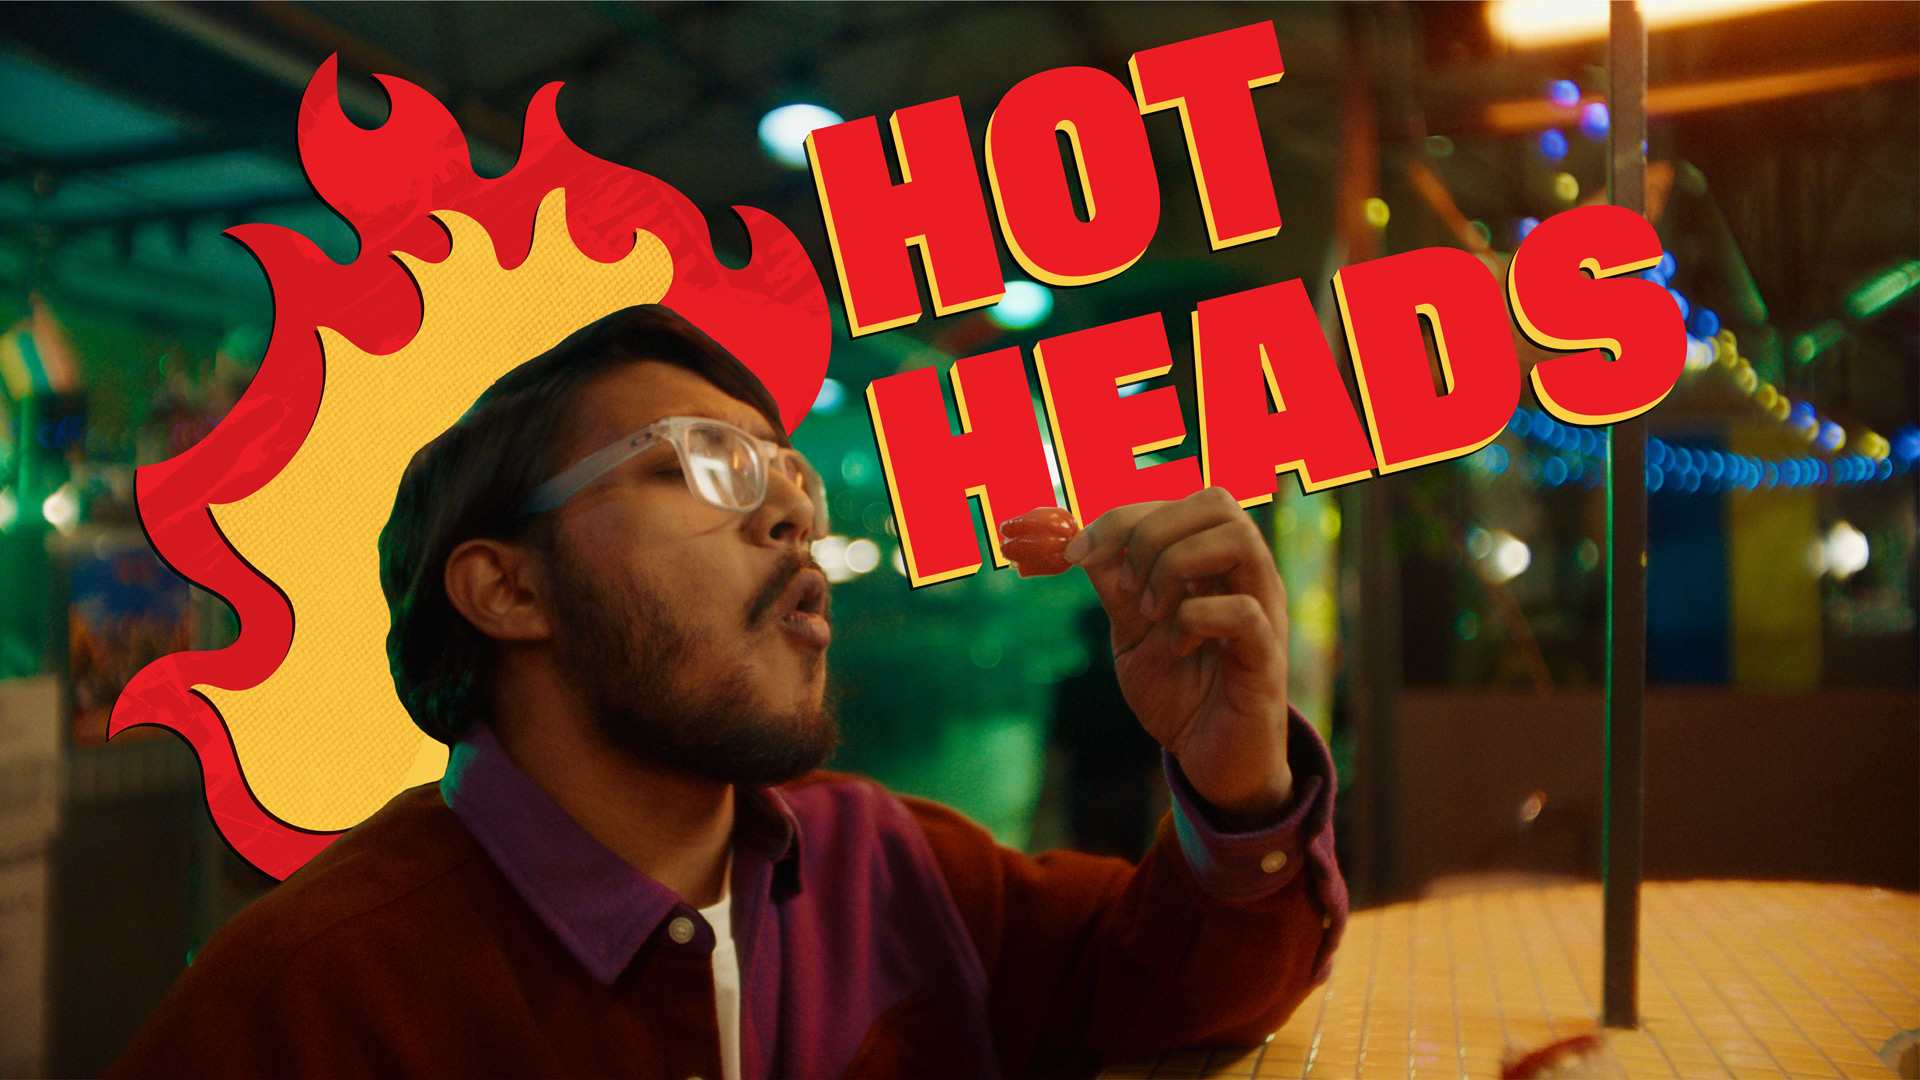 2-hot-head